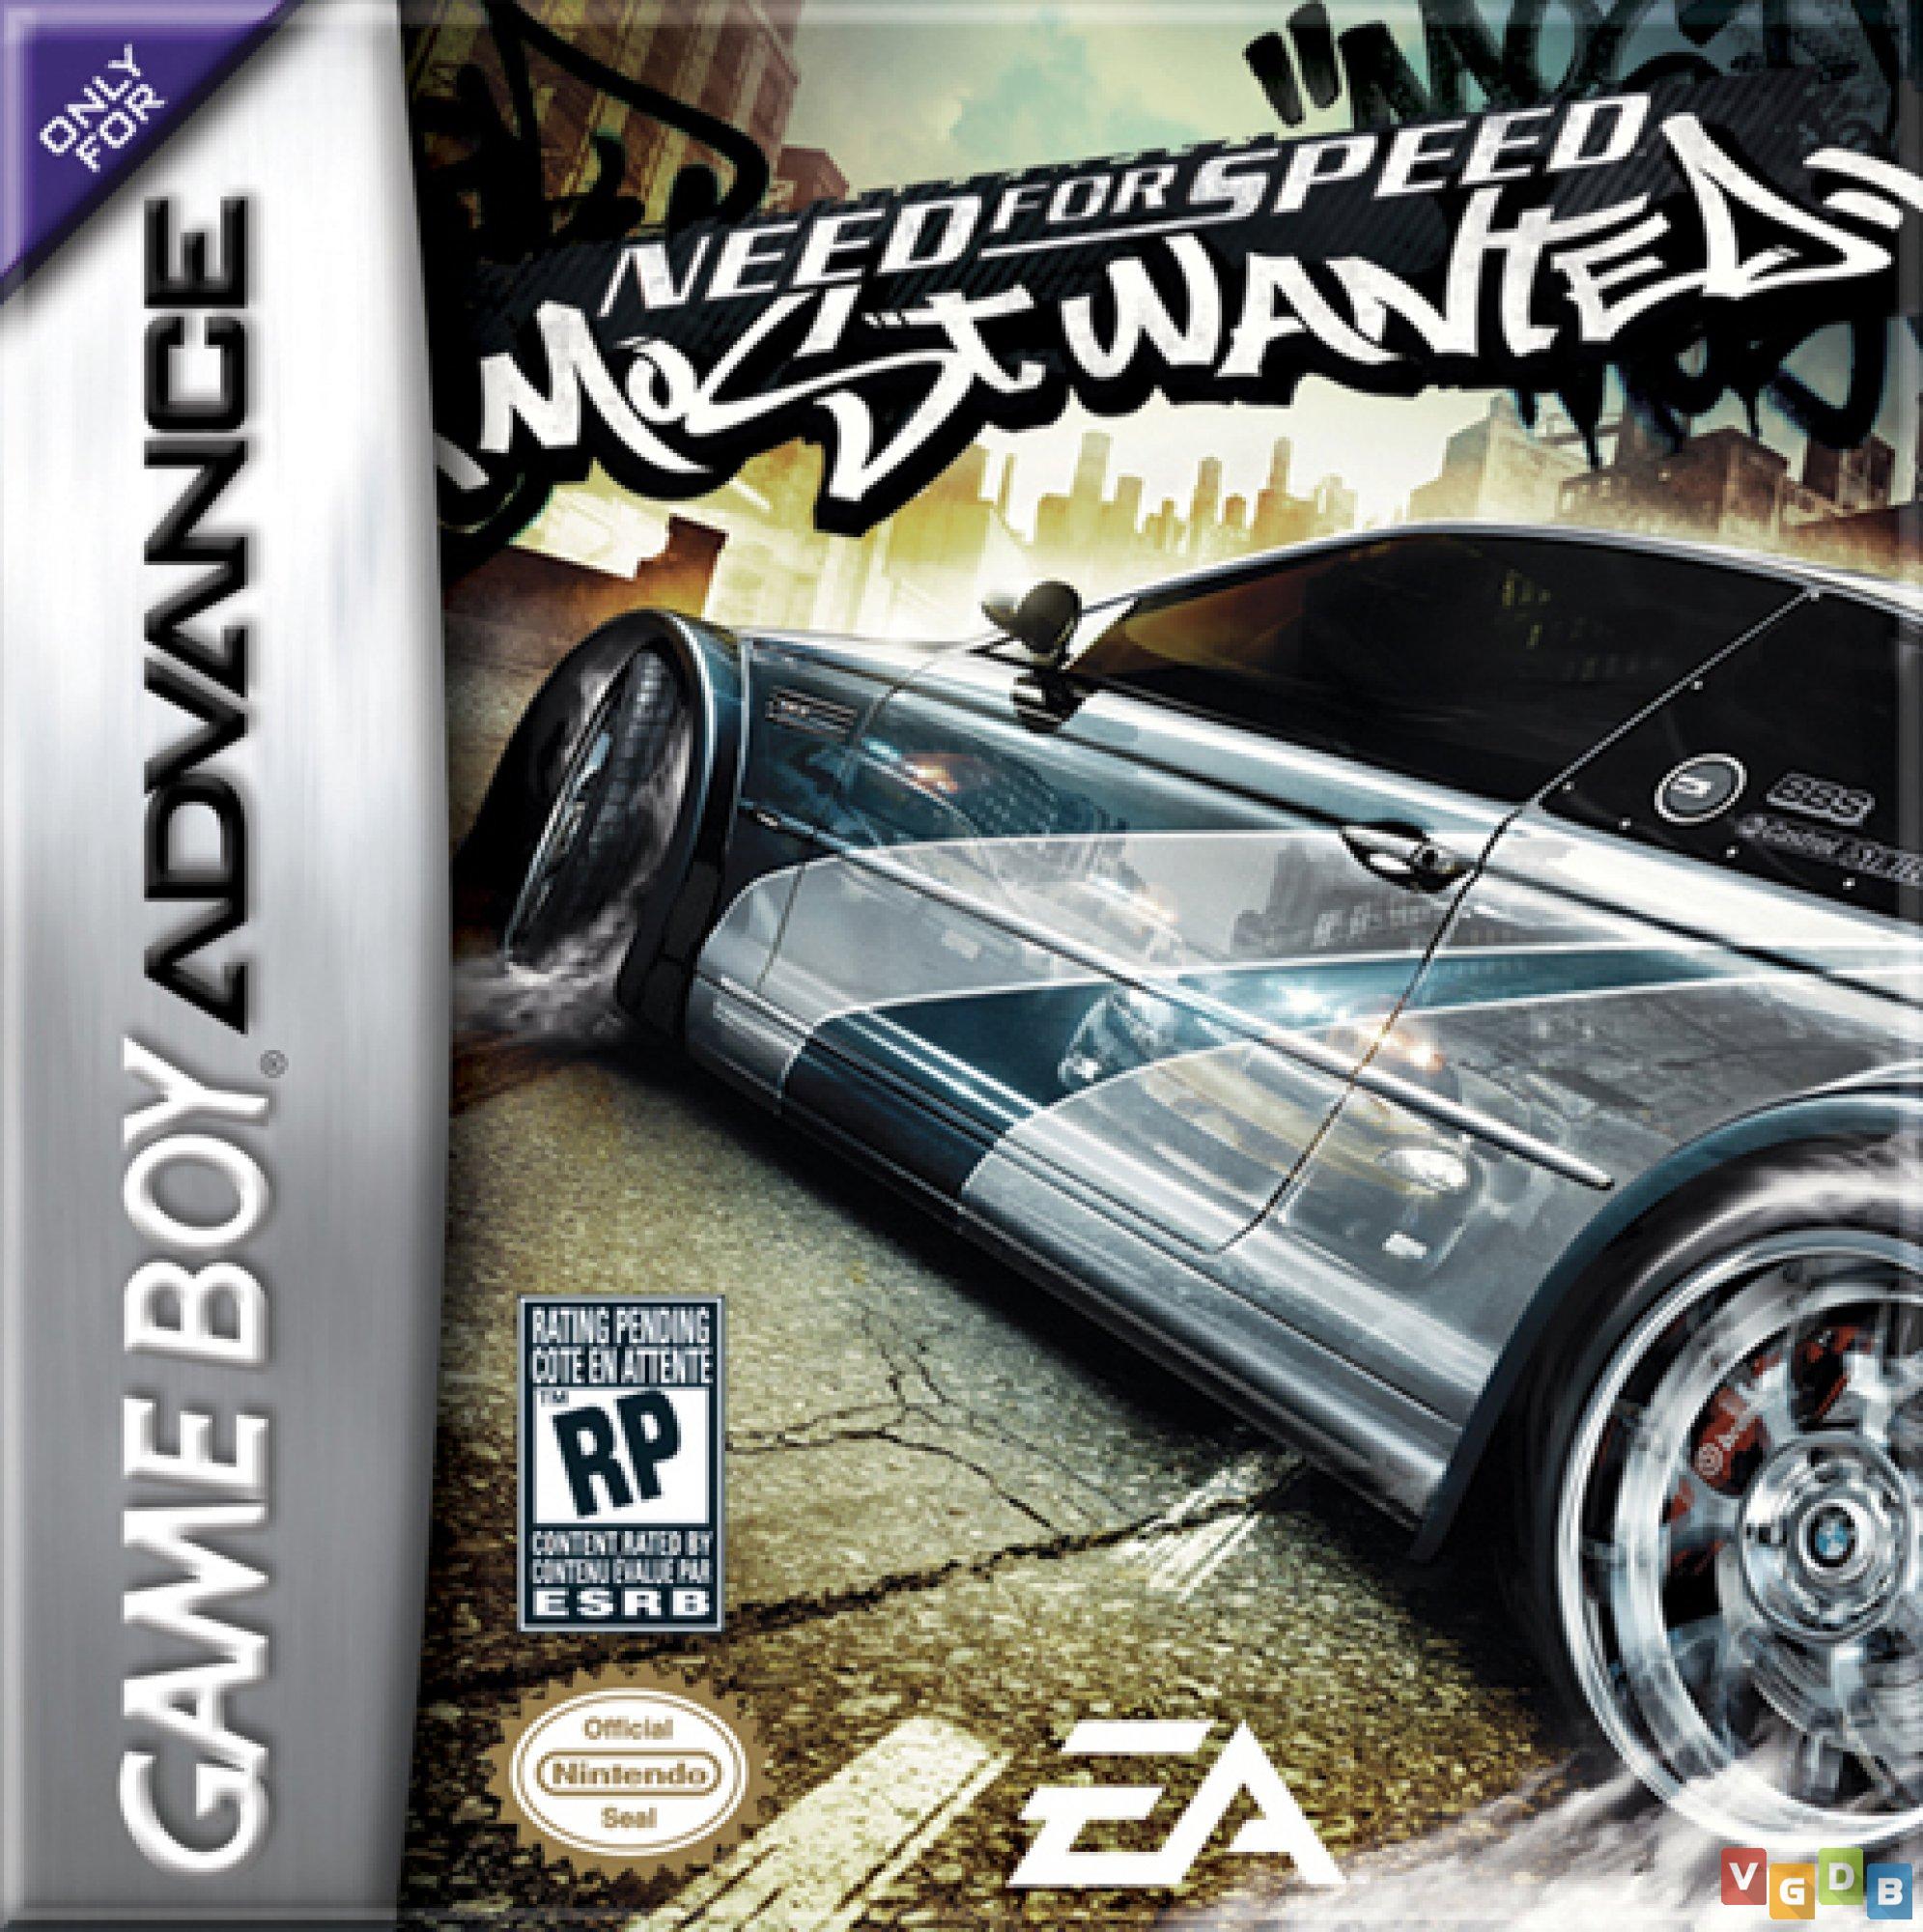 Need for Speed: Most Wanted (jogo eletrônico de 2005) – Wikipédia